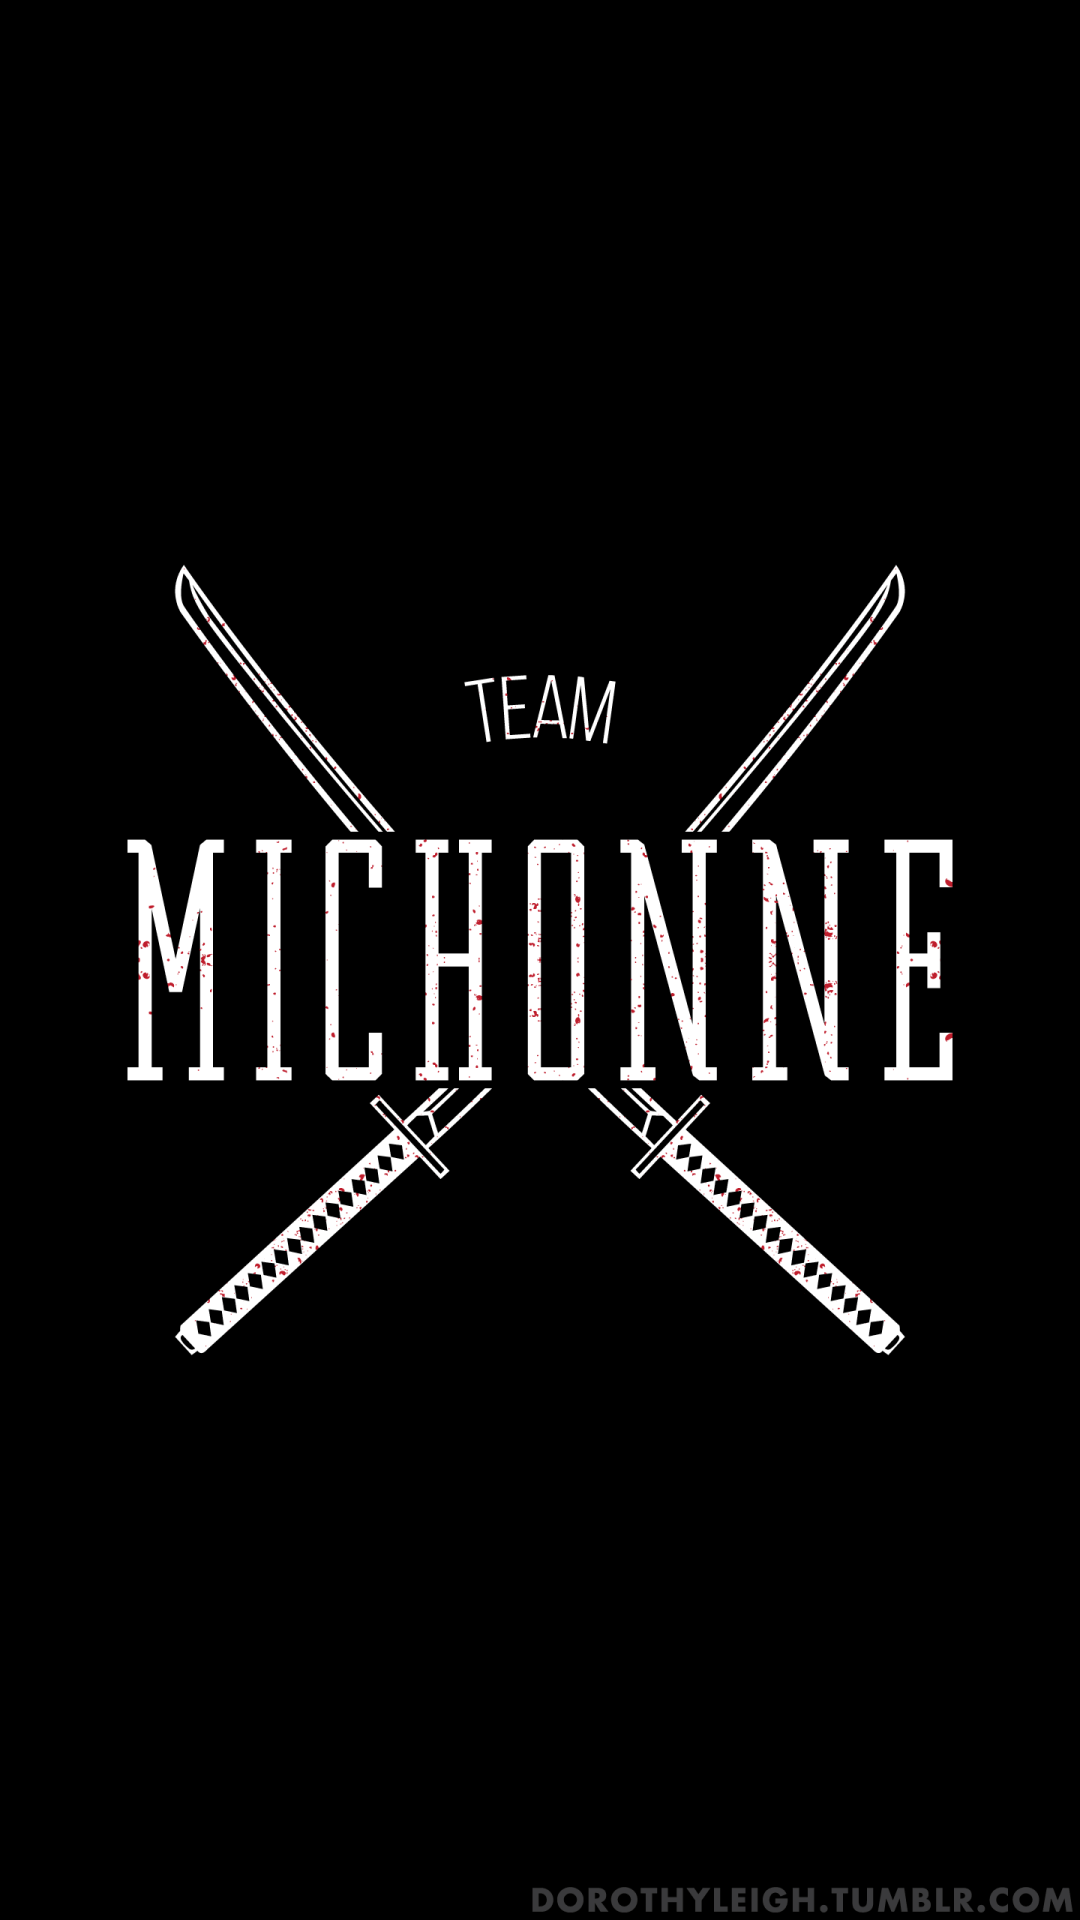 Team Michonne, Wallpaper Blog. Prints available below ^.^TeePublic